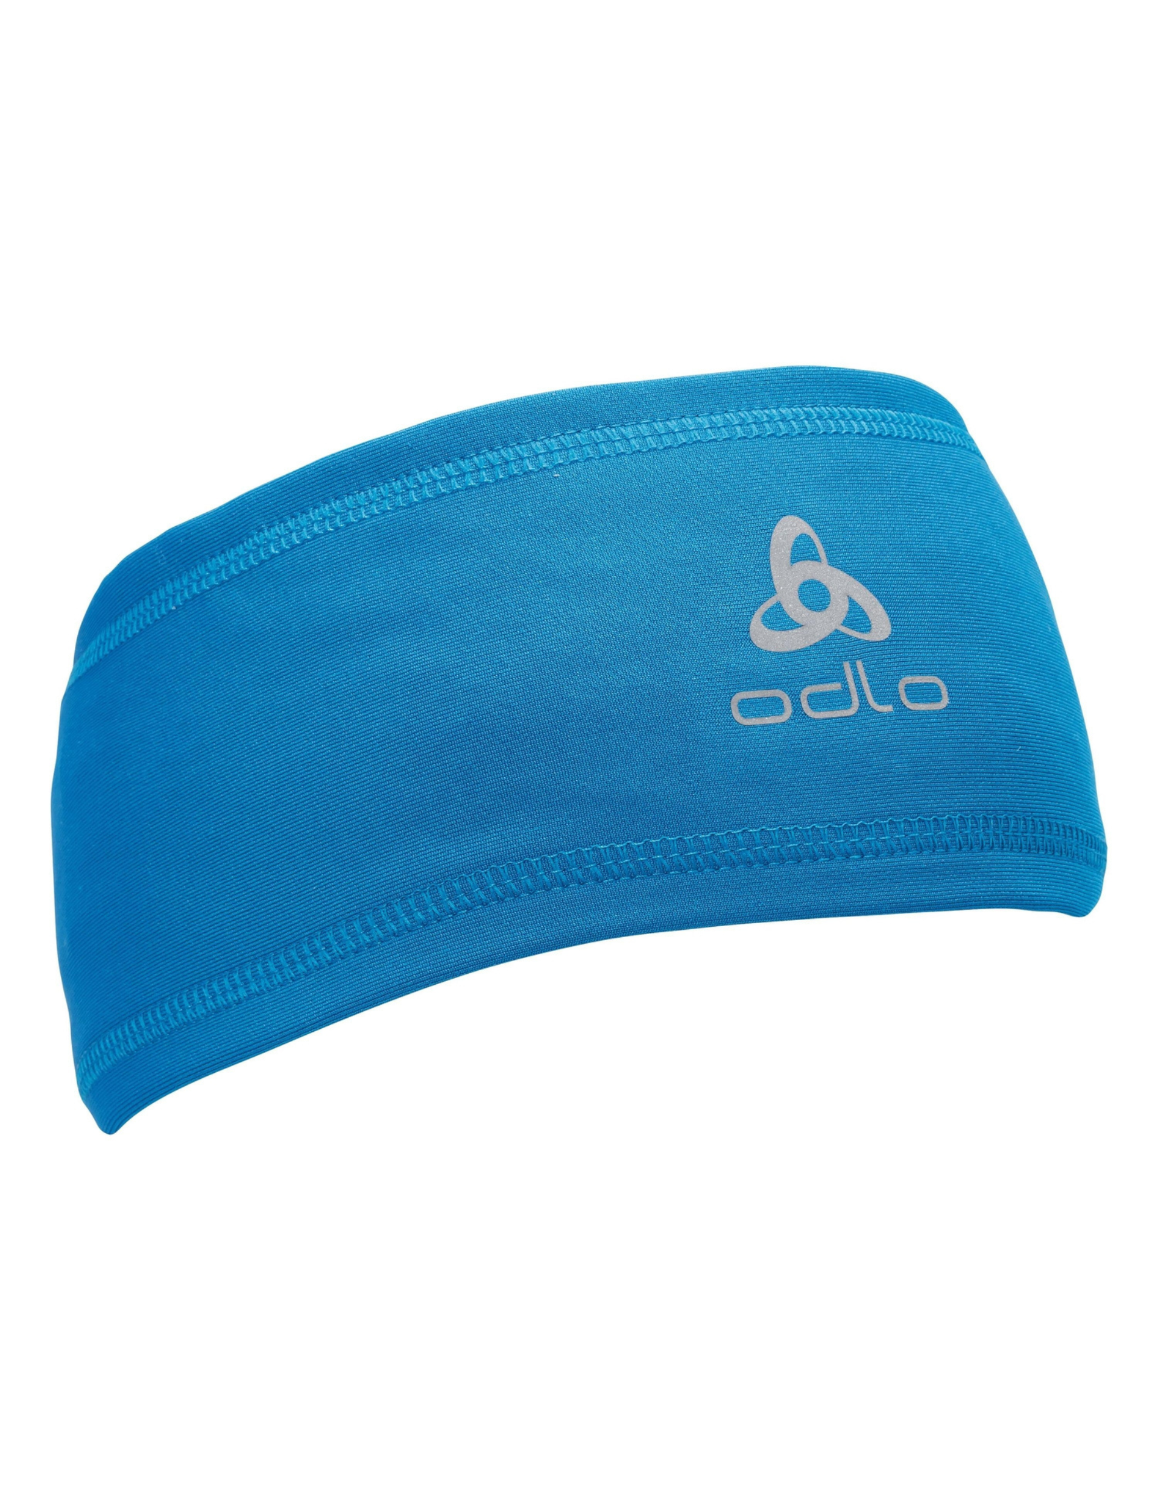 Bandeau hiver de Running Odlo Polyknit Bleu avec logo réfléchissant